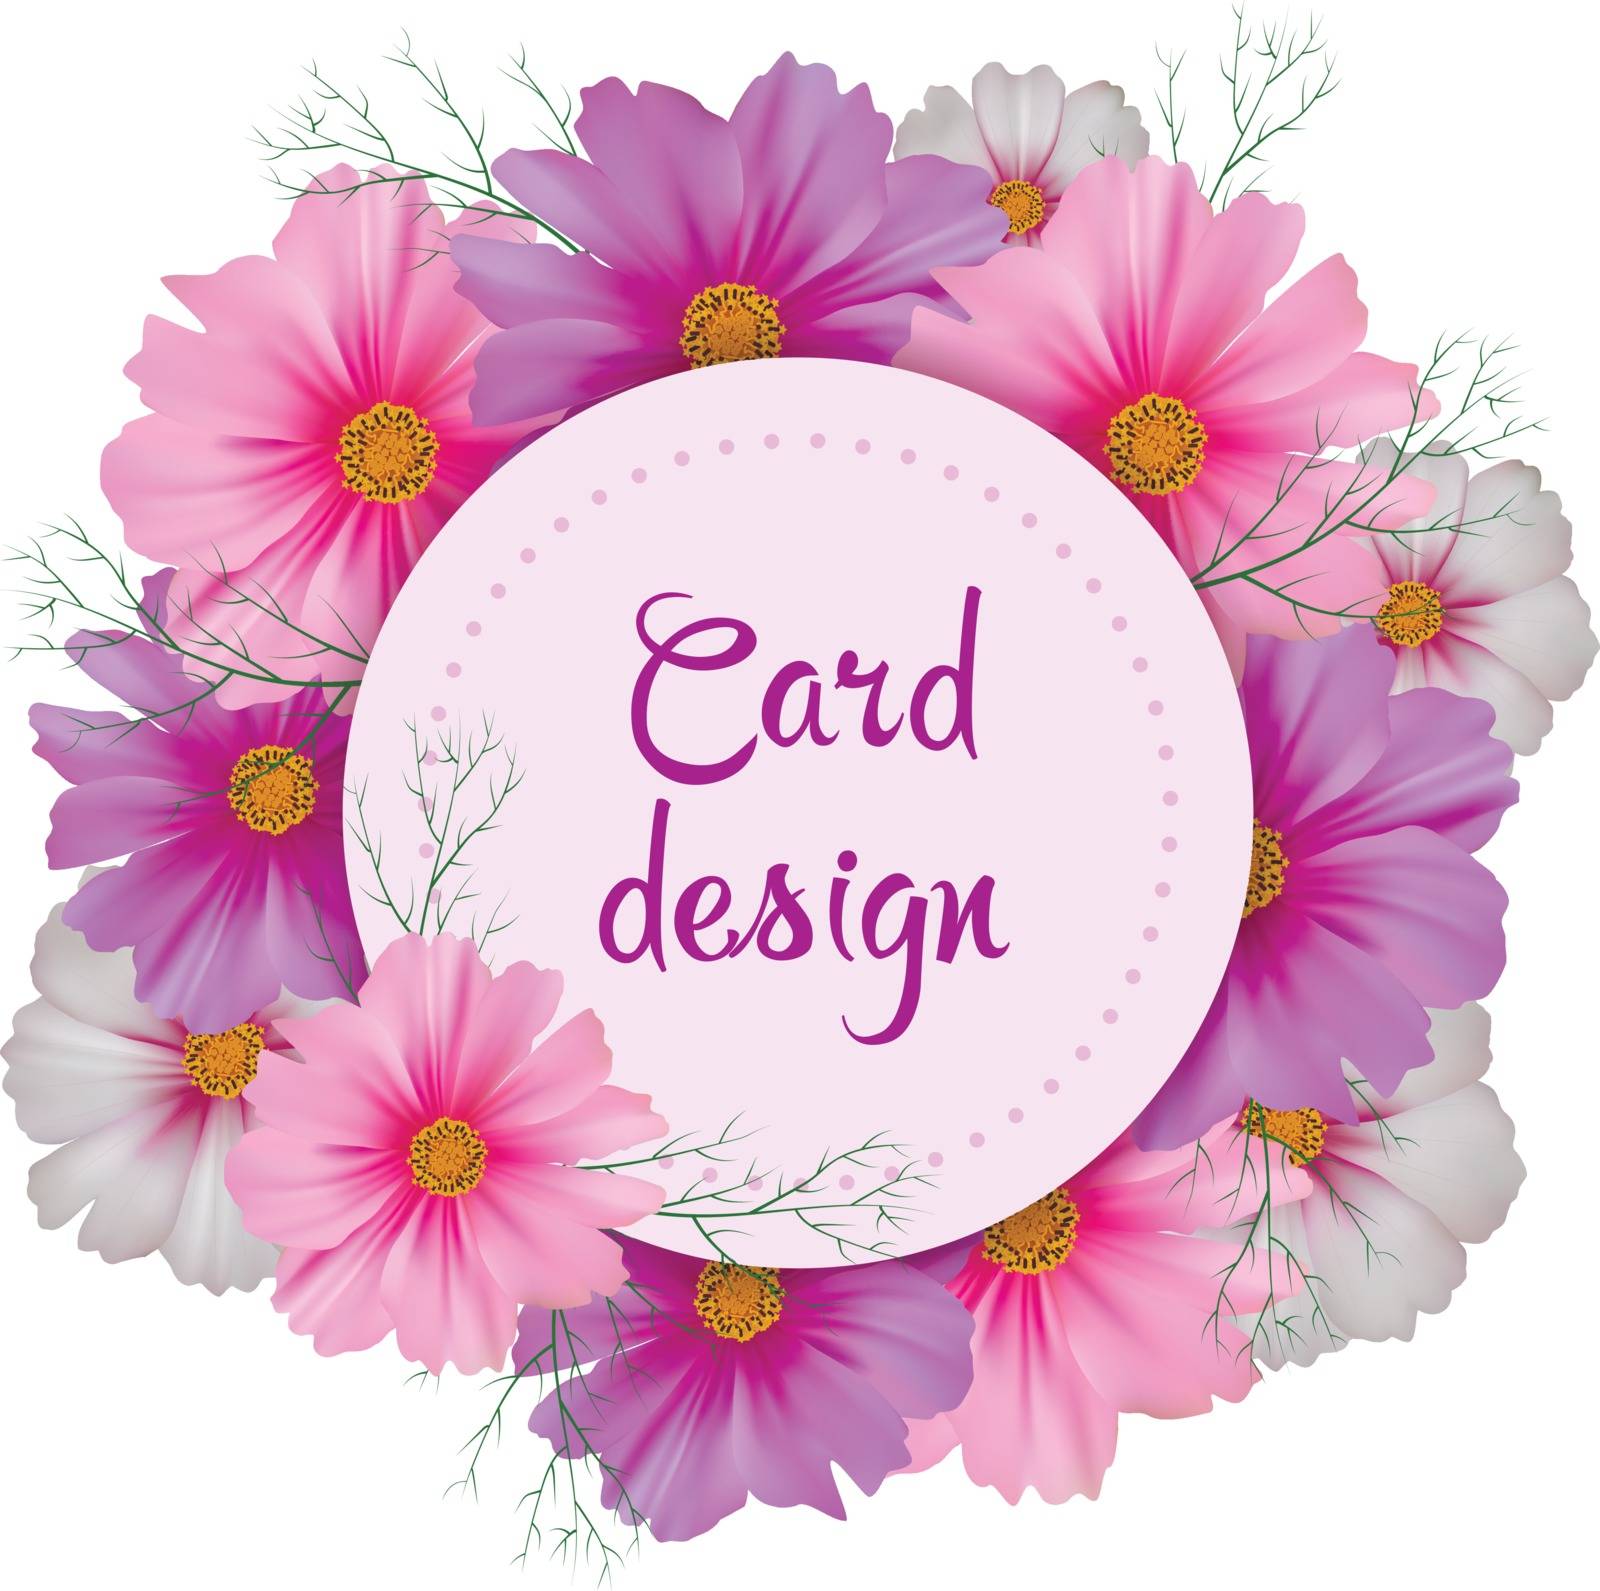 Cosmos flower card design. Round invitation. Vector illustration